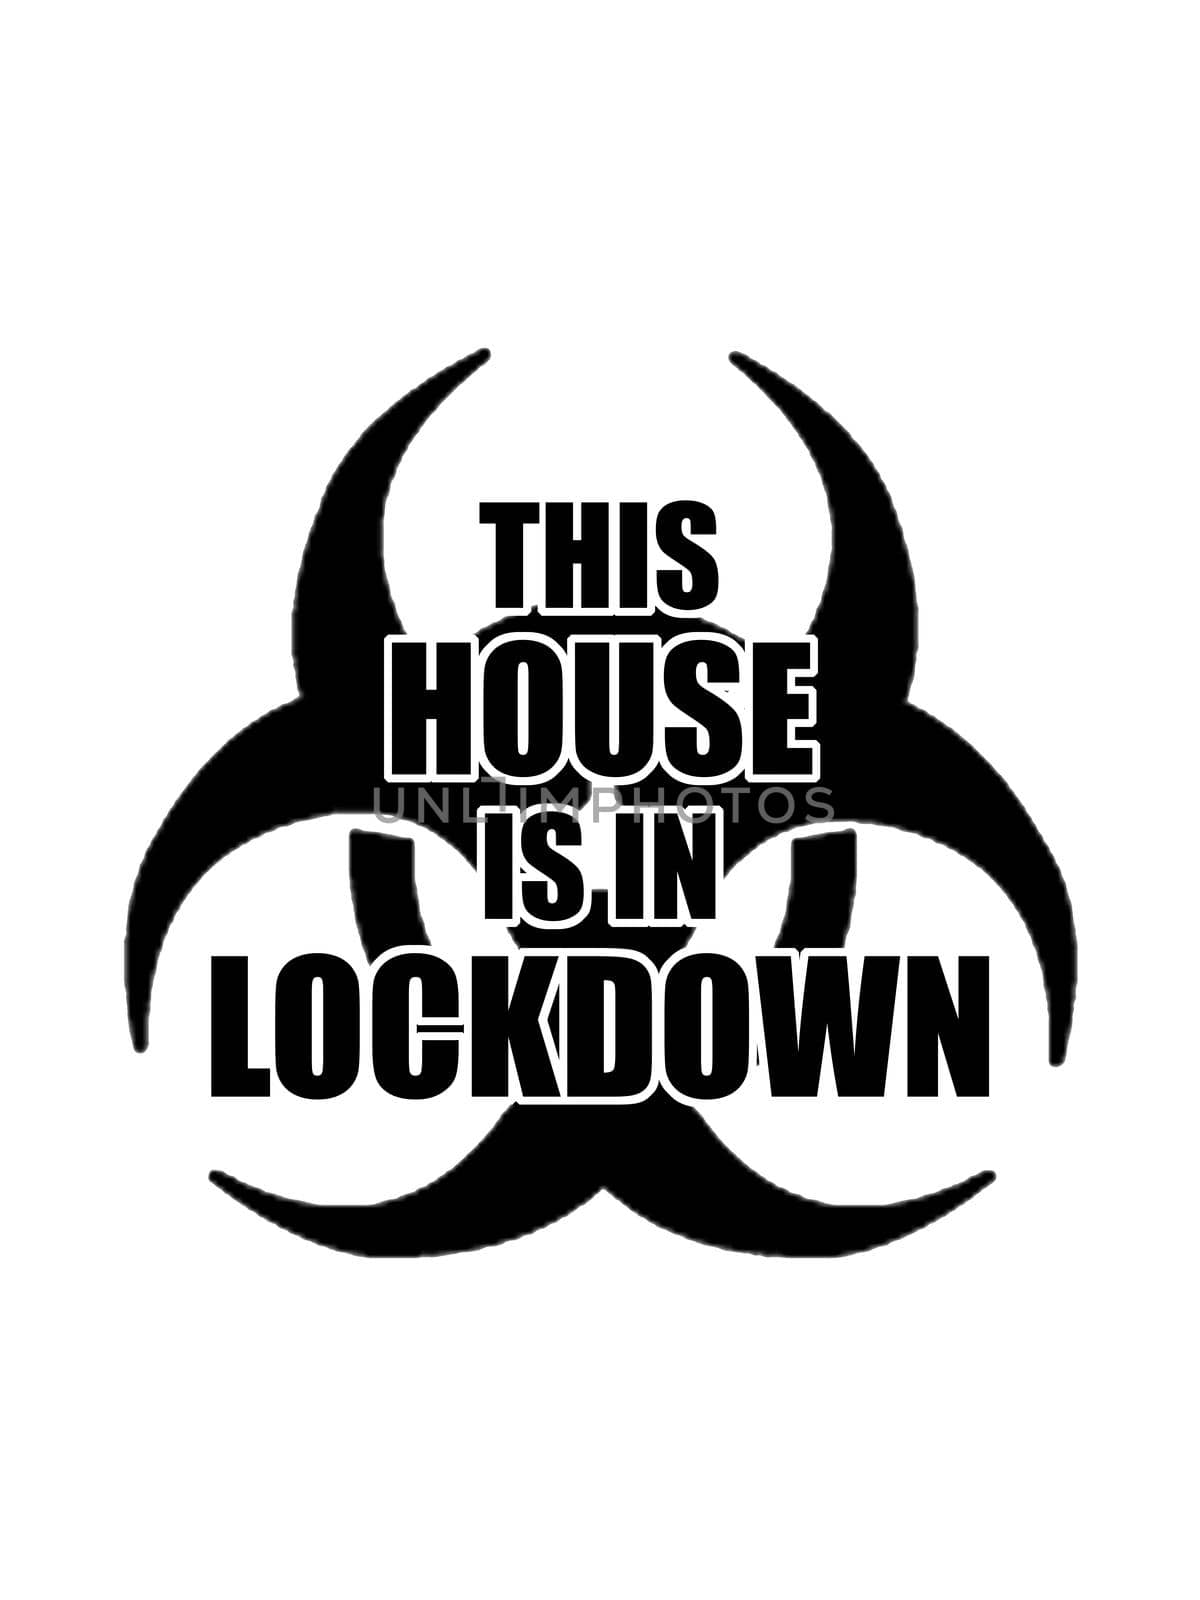 House in Lockdown by Bigalbaloo